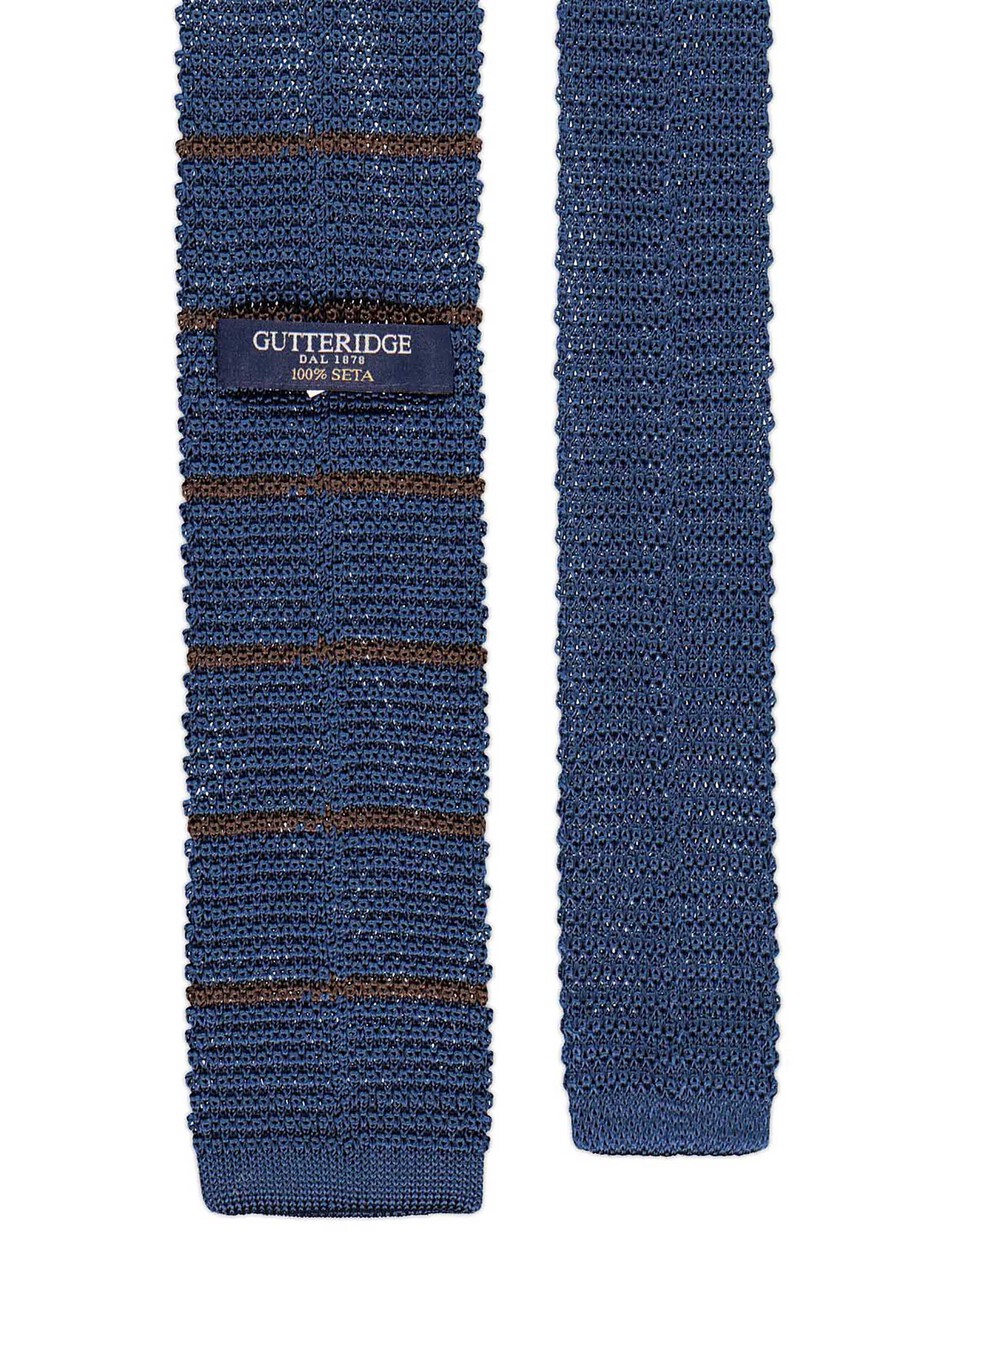 Cravatta a maglia rigata | GutteridgeEU | catalog-gutteridge-storefront Uomo